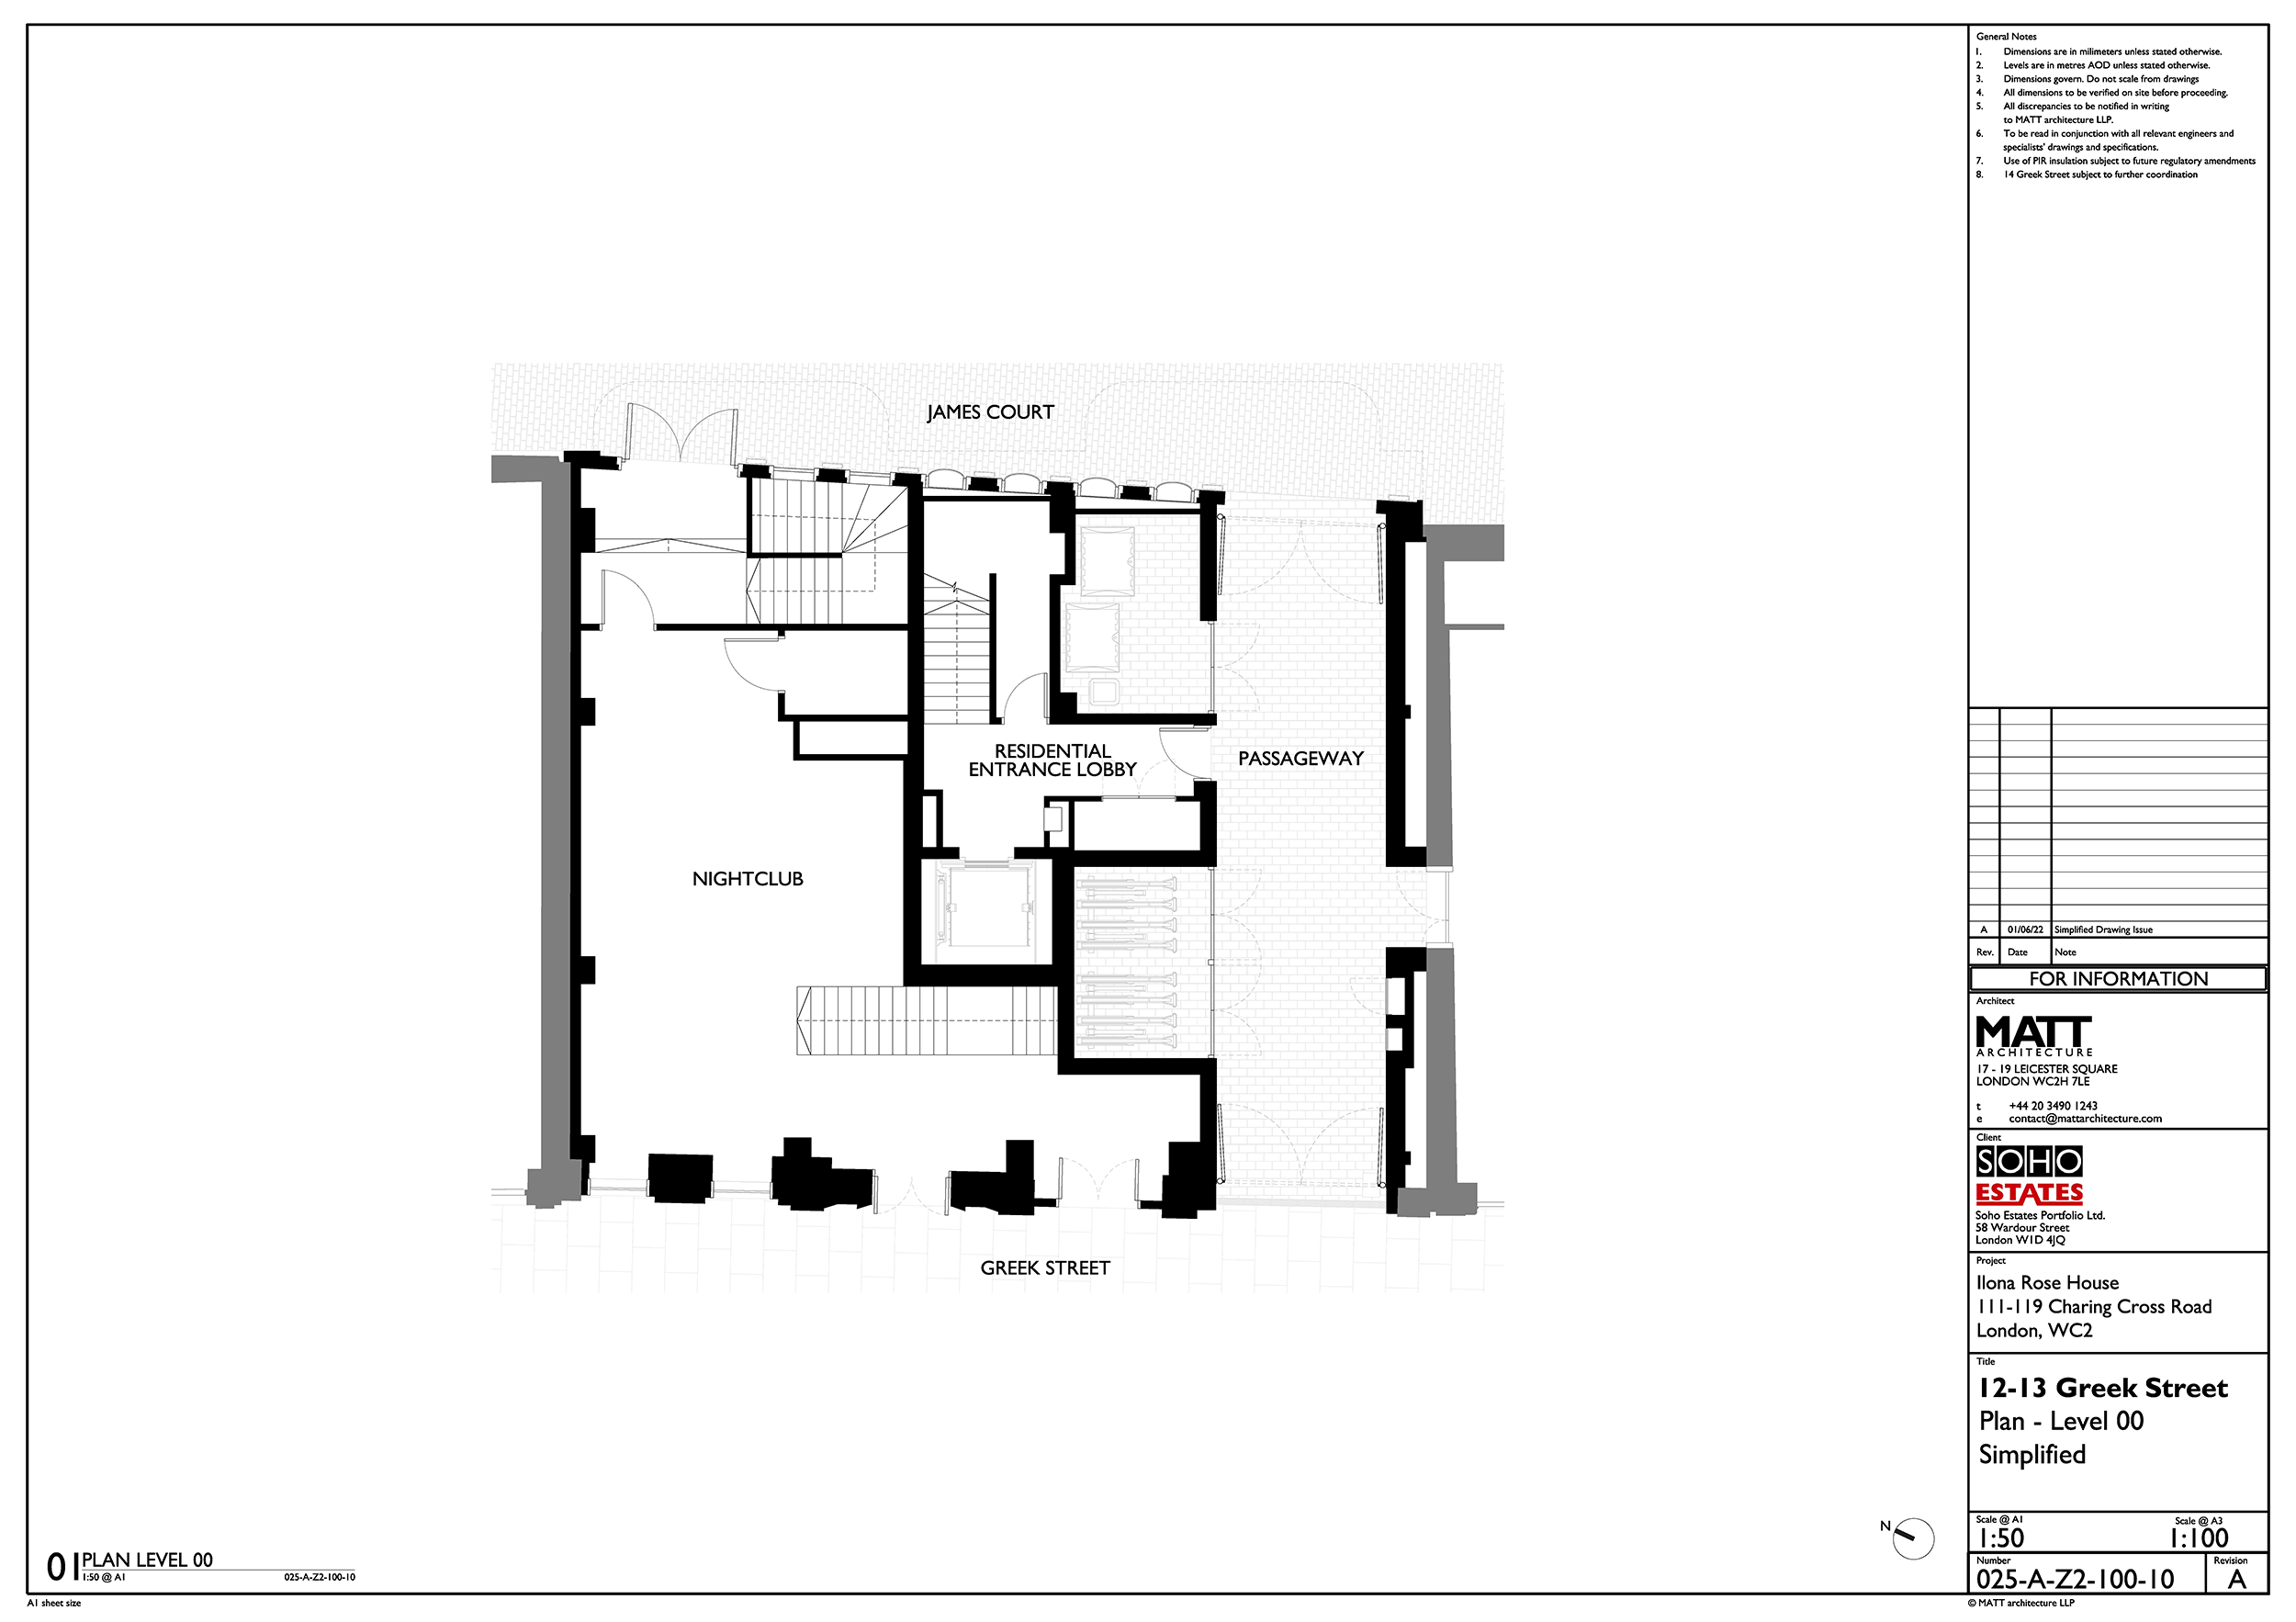 Ground floor plan of 12-13 Greek Street